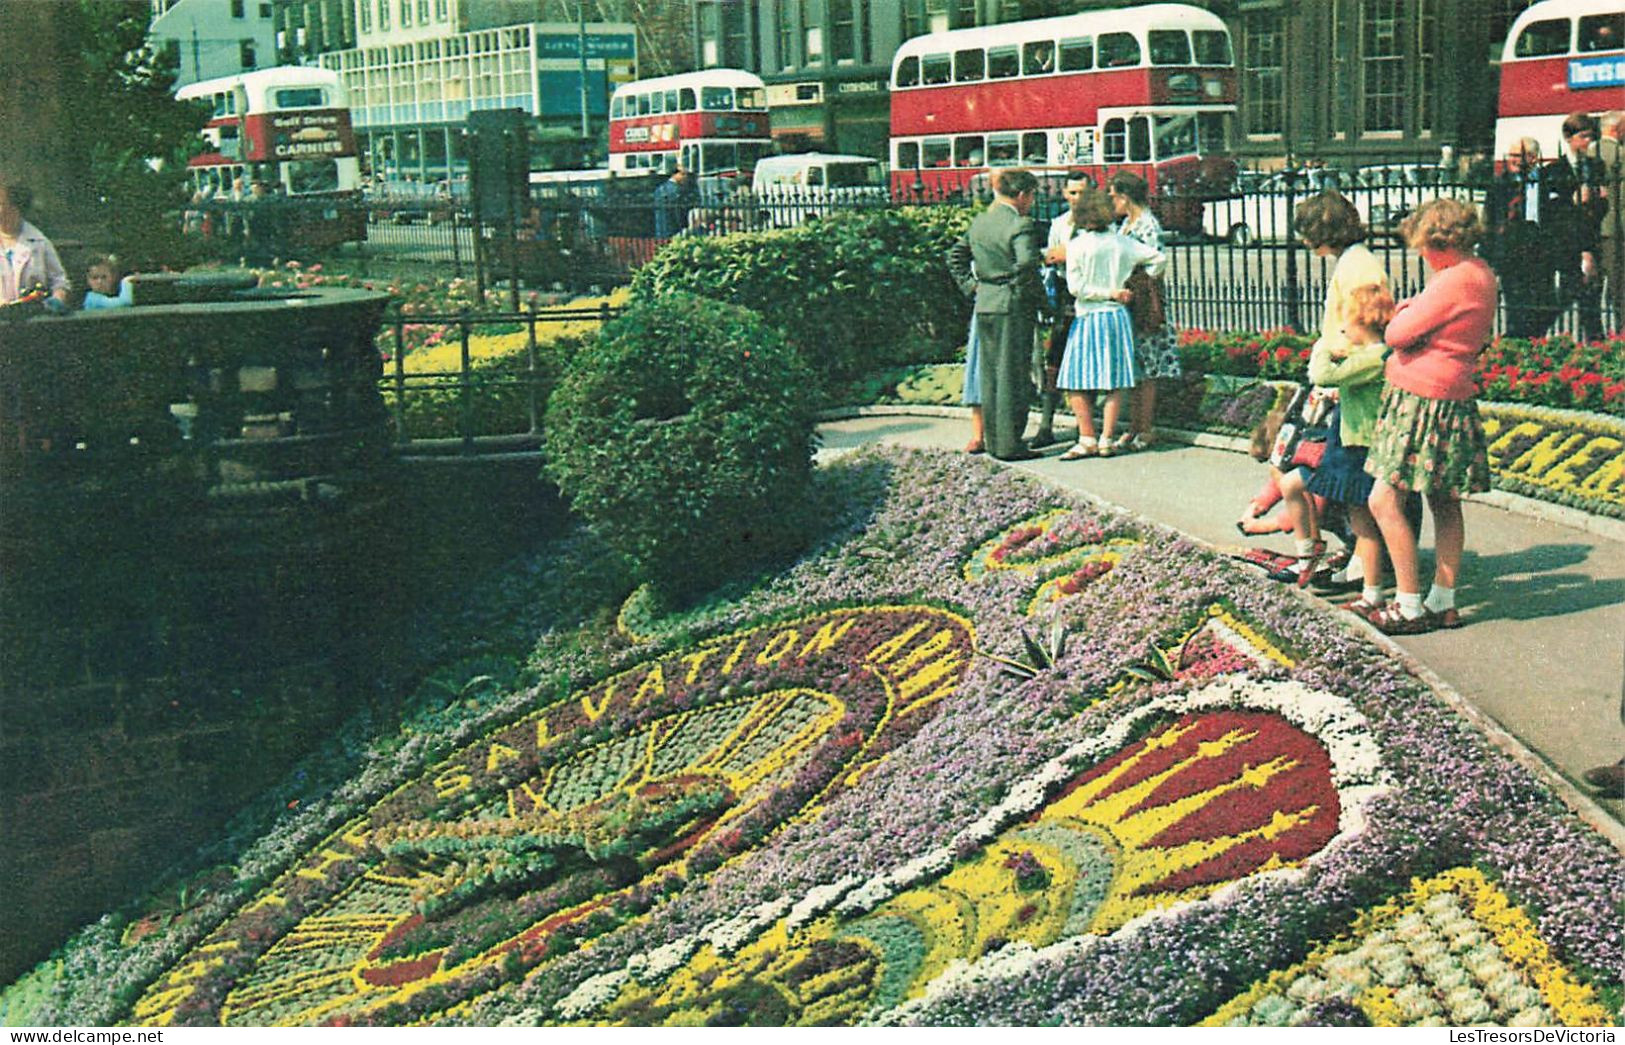 ROYAUME-UNI - Angleterre - Édimbourg - Floral Clock - Princes Street Gardens - Colorisé - Carte Postale - Midlothian/ Edinburgh